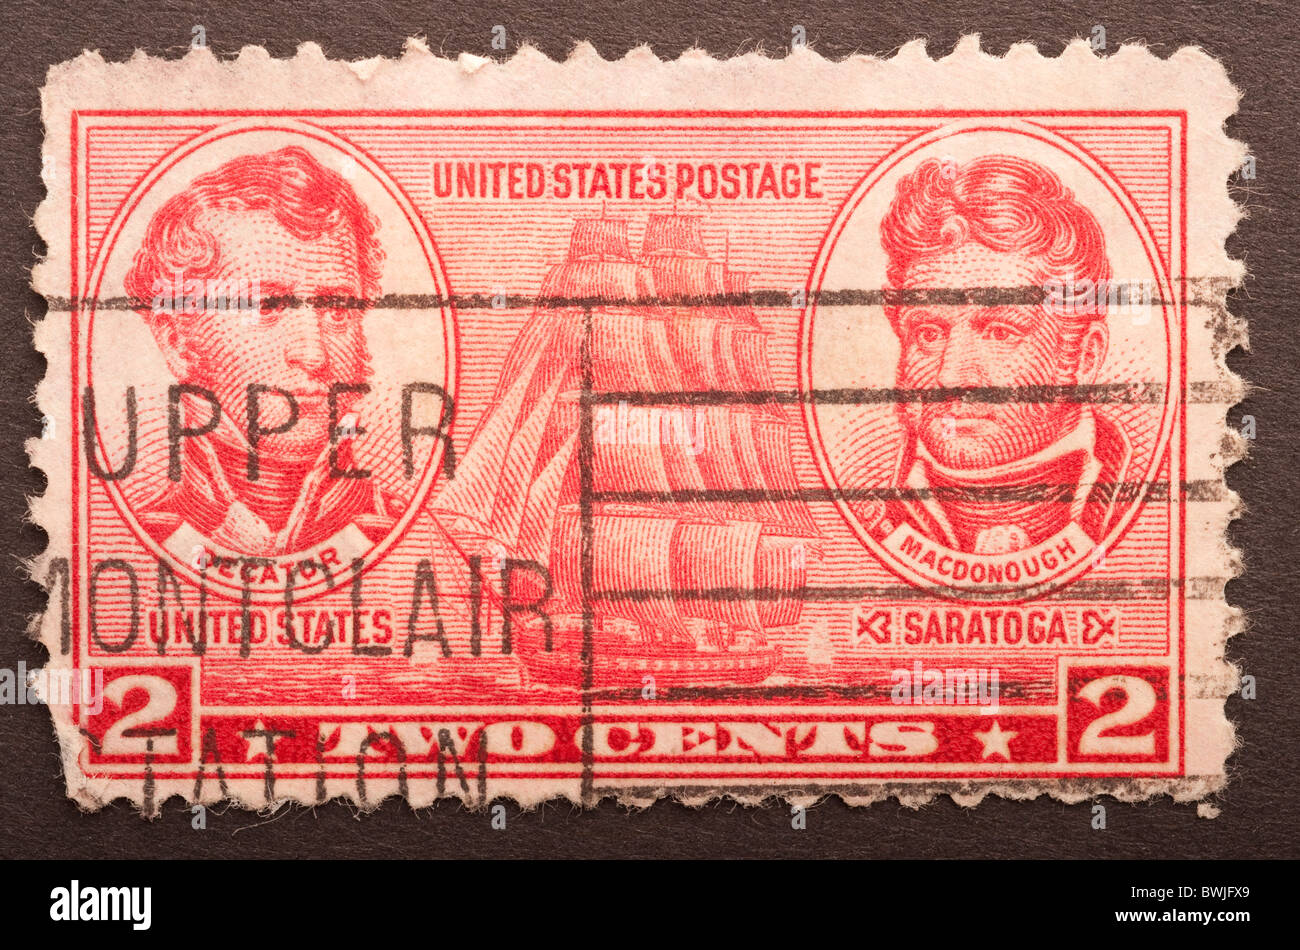 United States Postage 2 cents Stock Photo